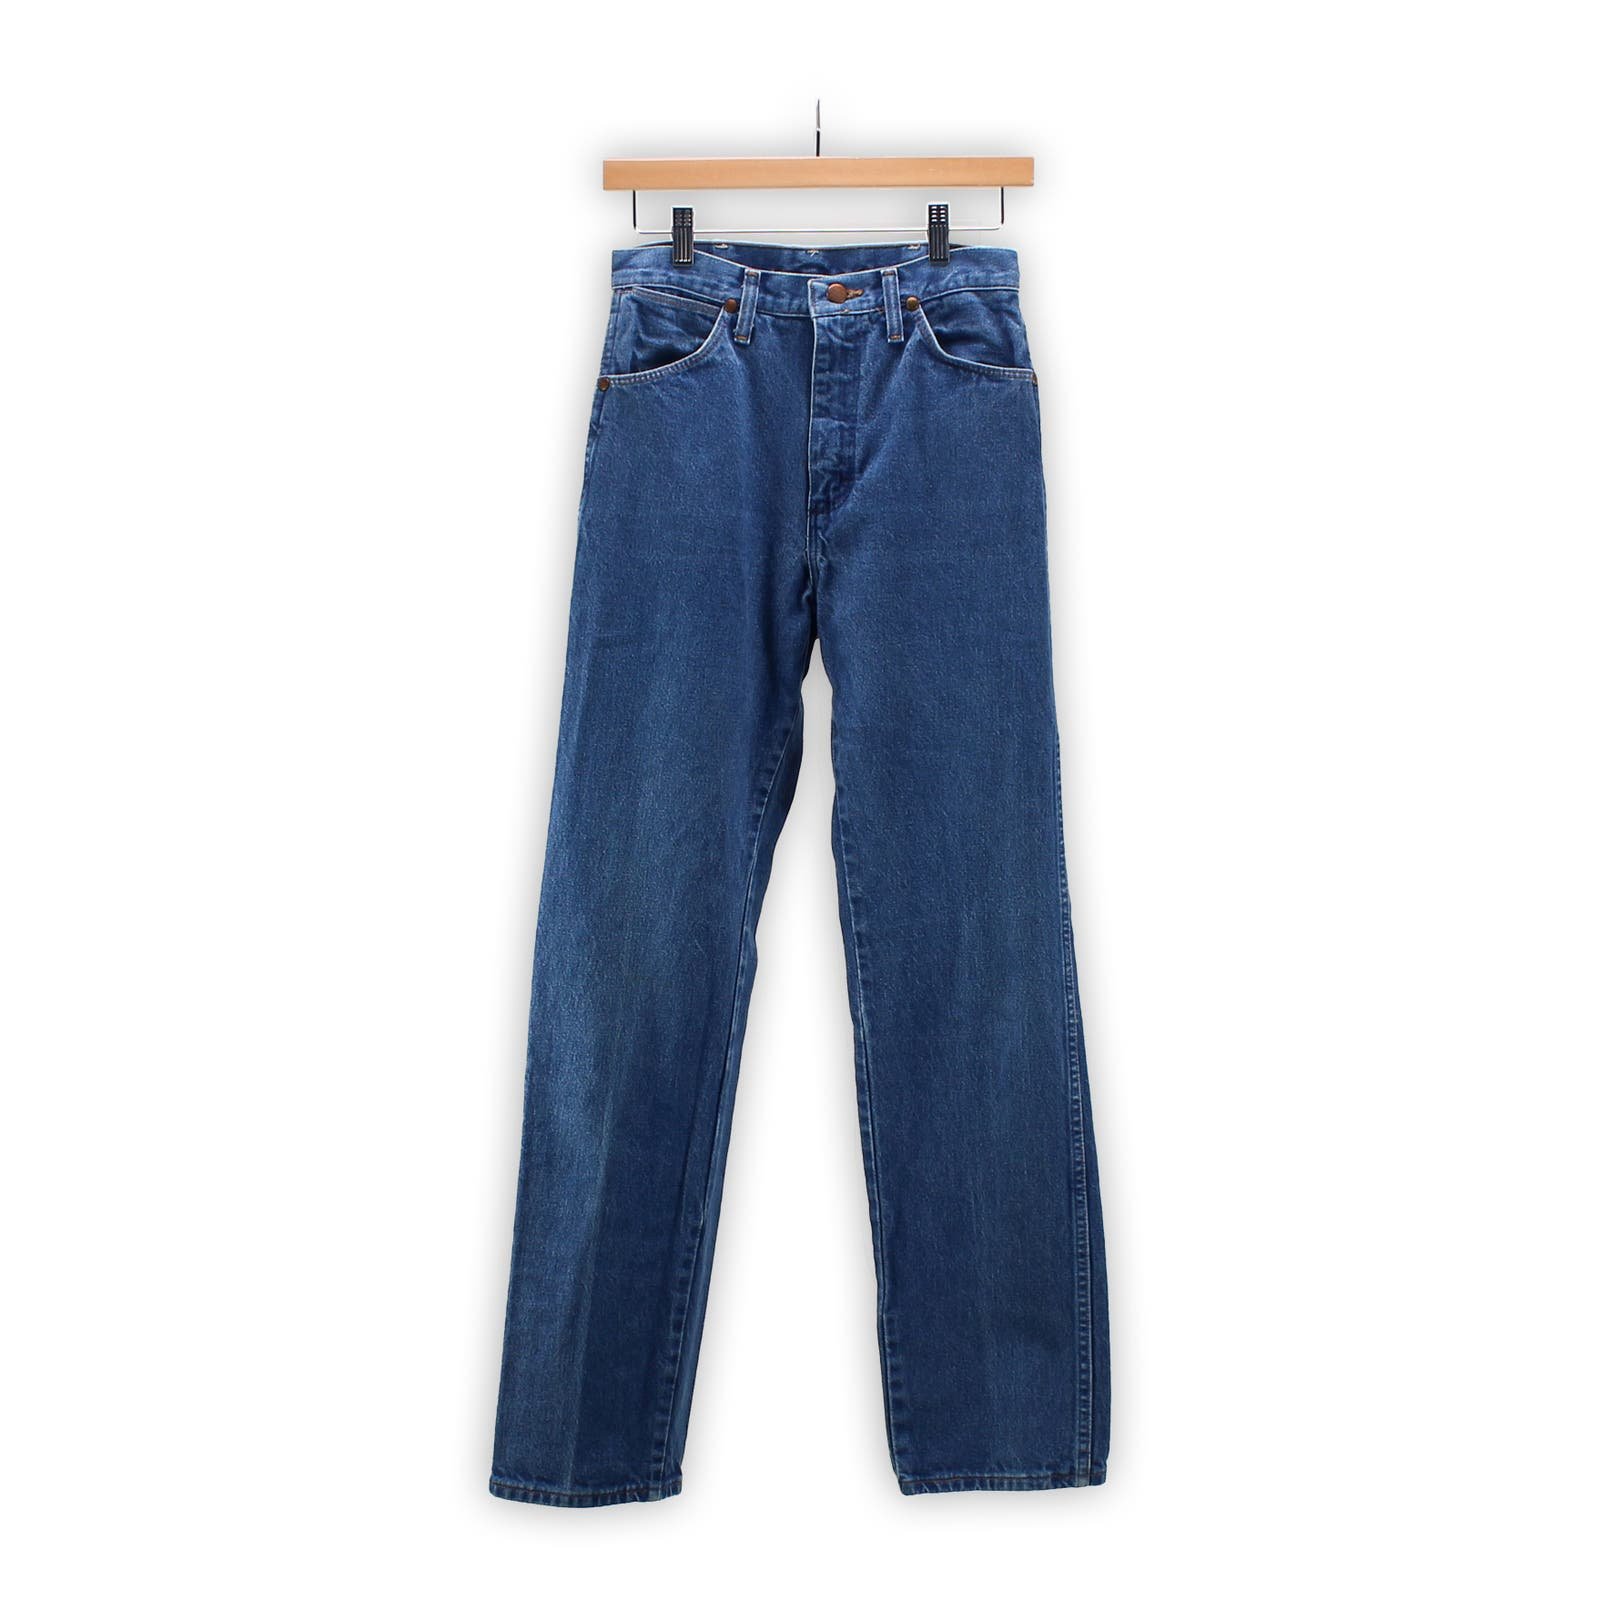 the Lowest price Wrangler Jeans - Vintage Denim Pants -